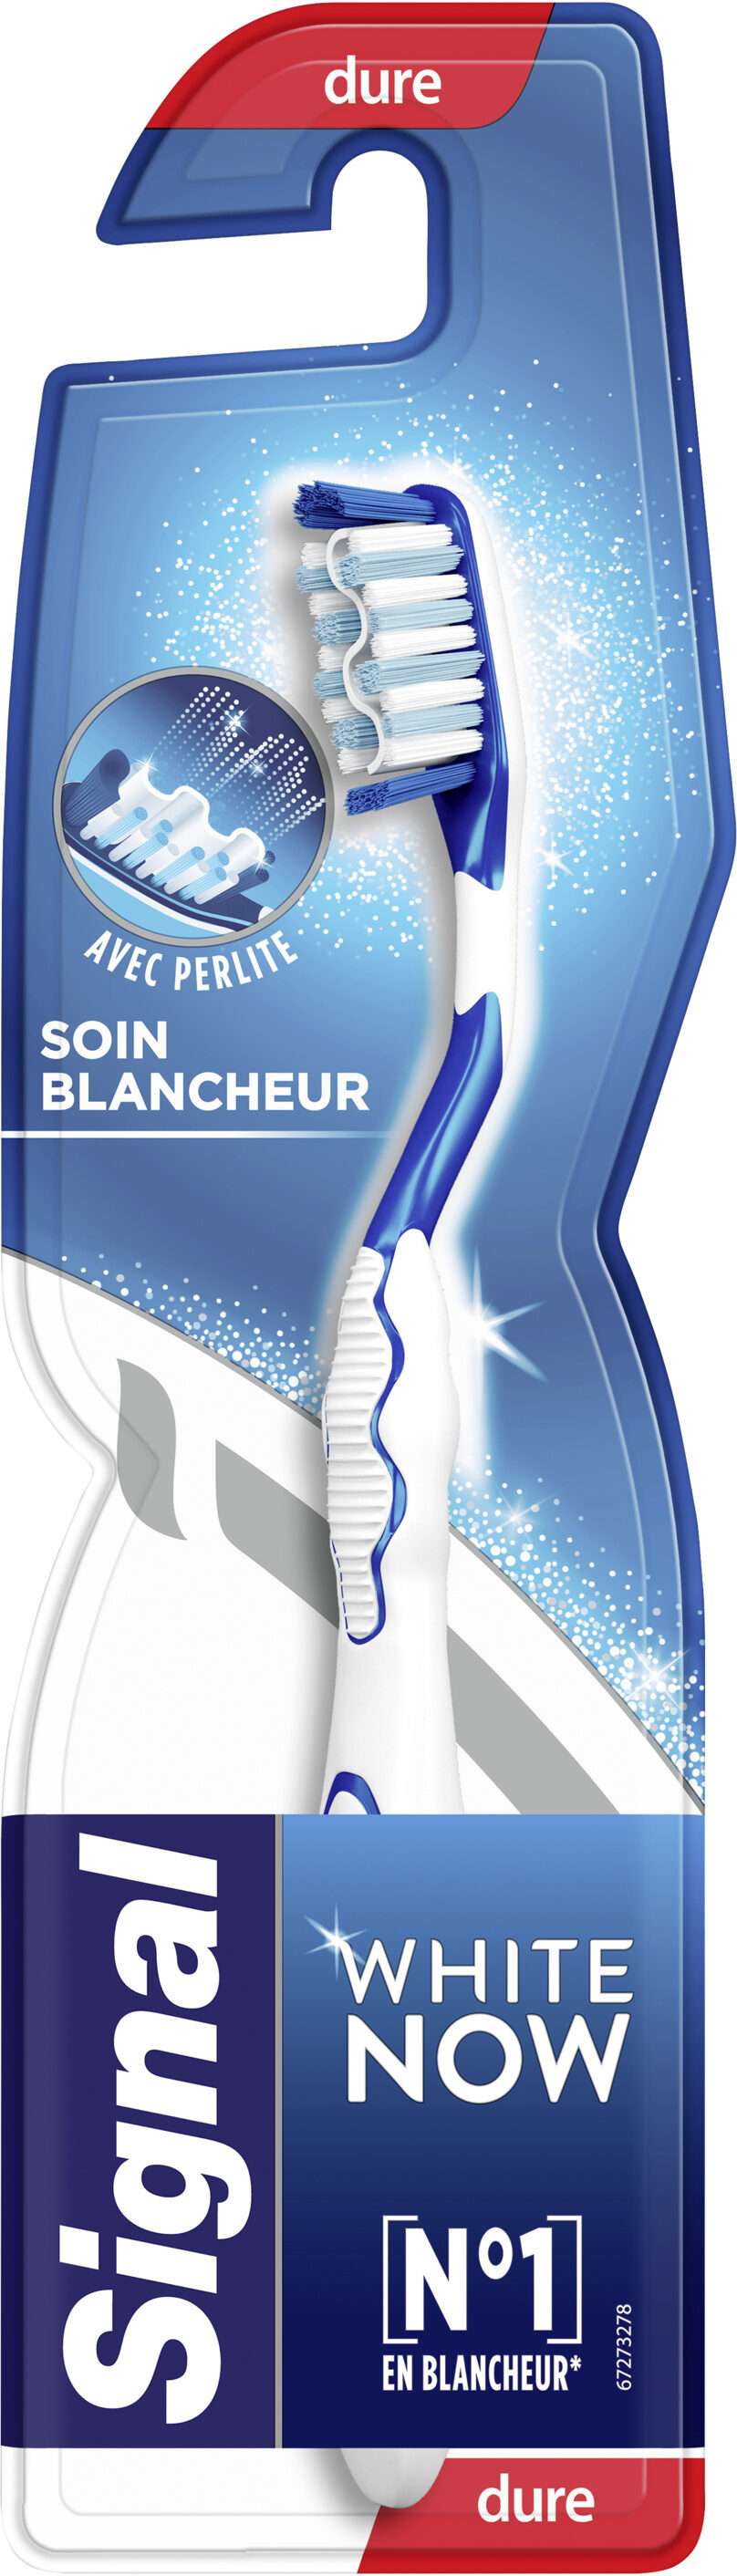 Signal Brosse à Dents Soin Blancheur Dure x1 - Product - fr